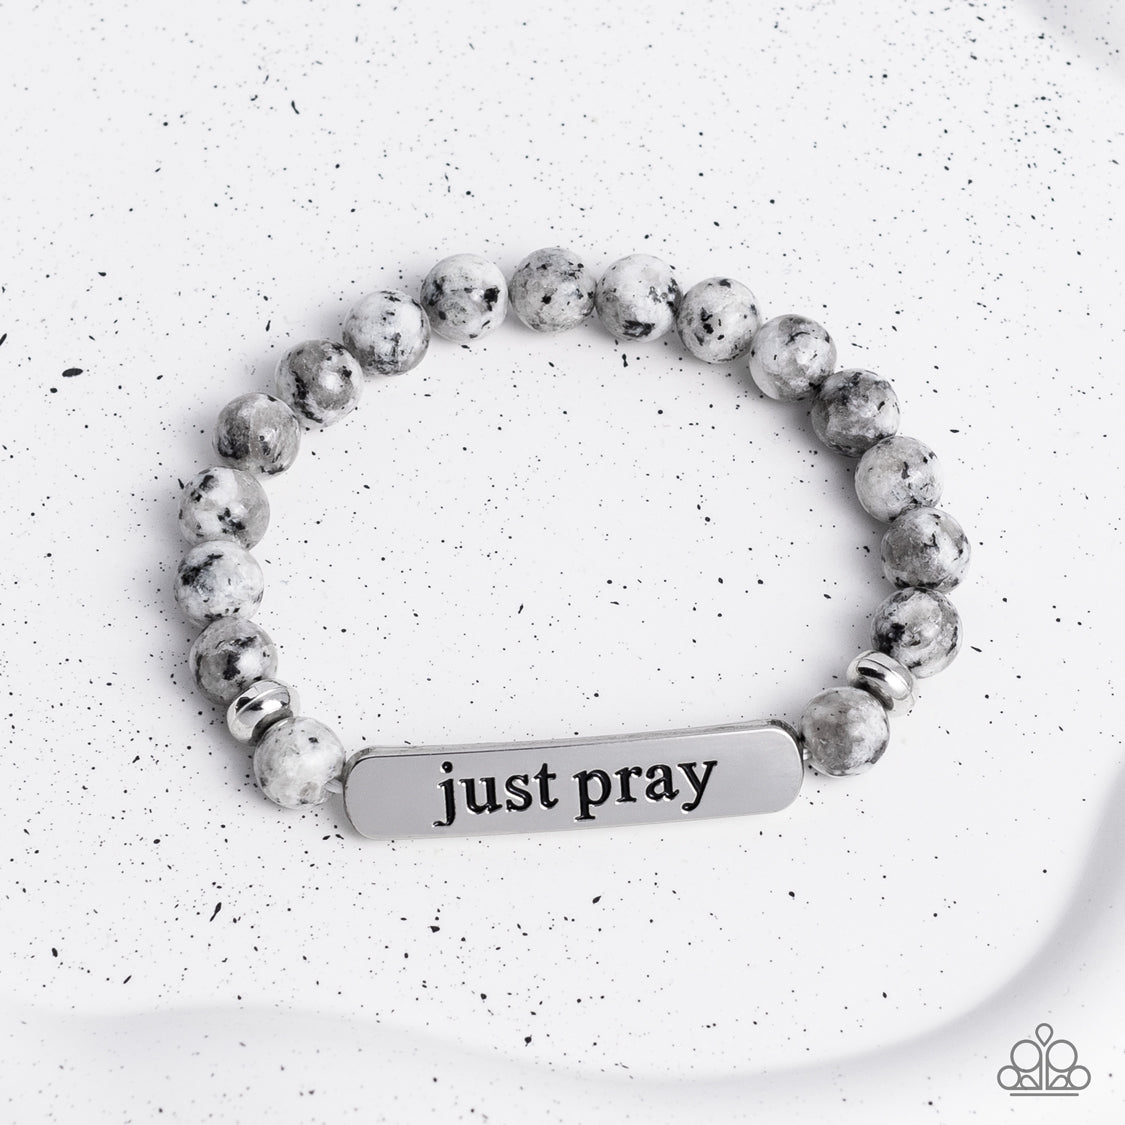 Just Pray - silver - Paparazzi bracelet